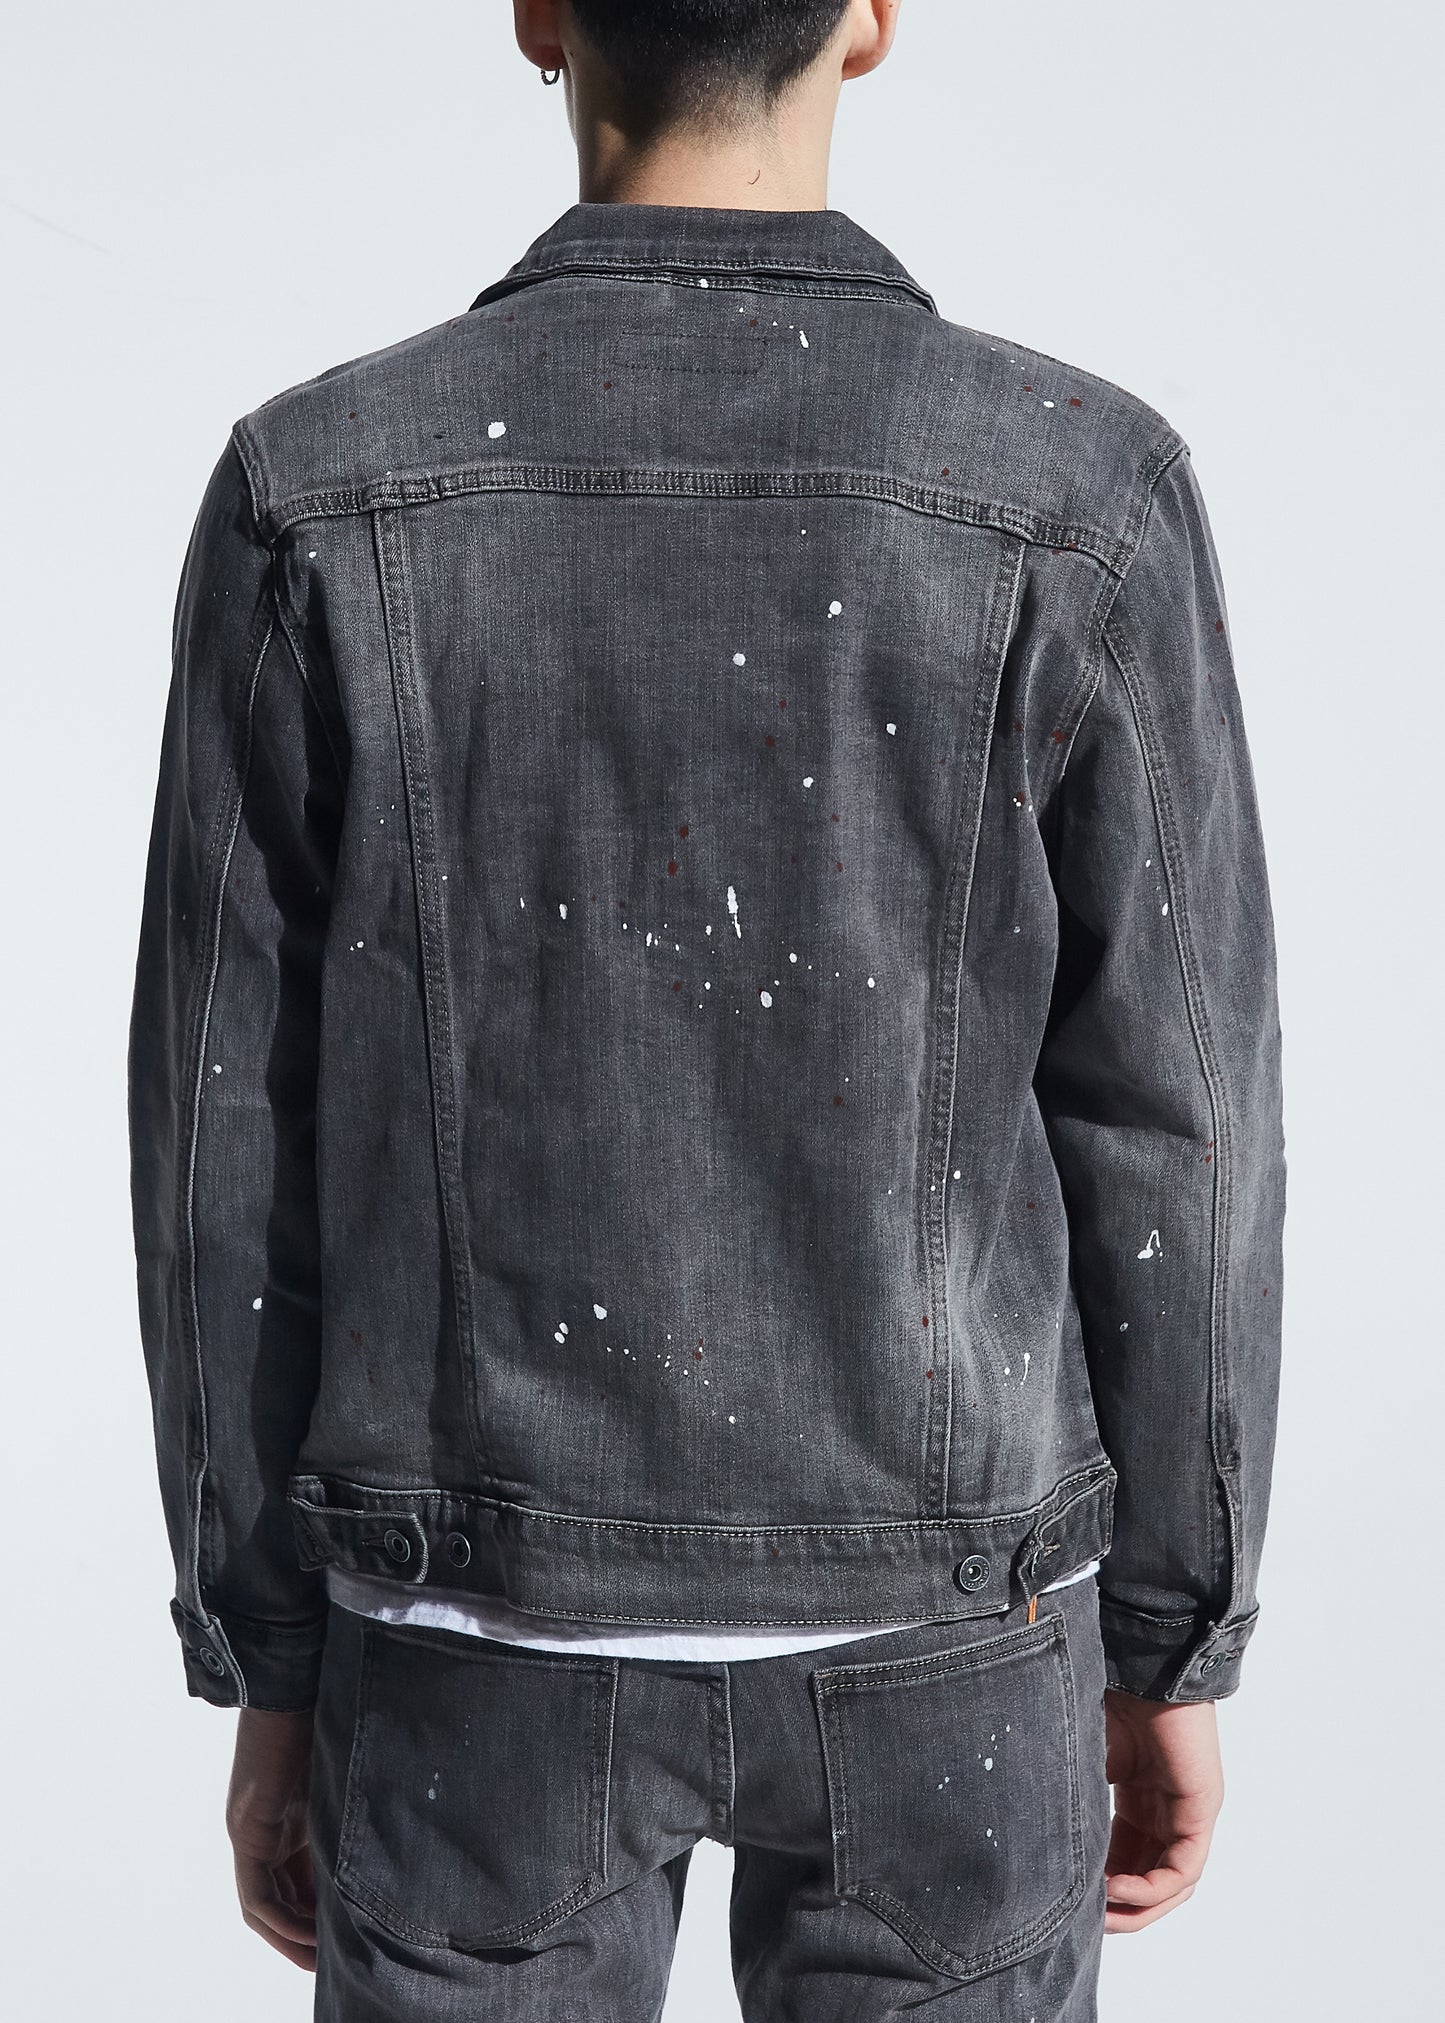 Bering Denim Jacket (Grey Paint Splatter)